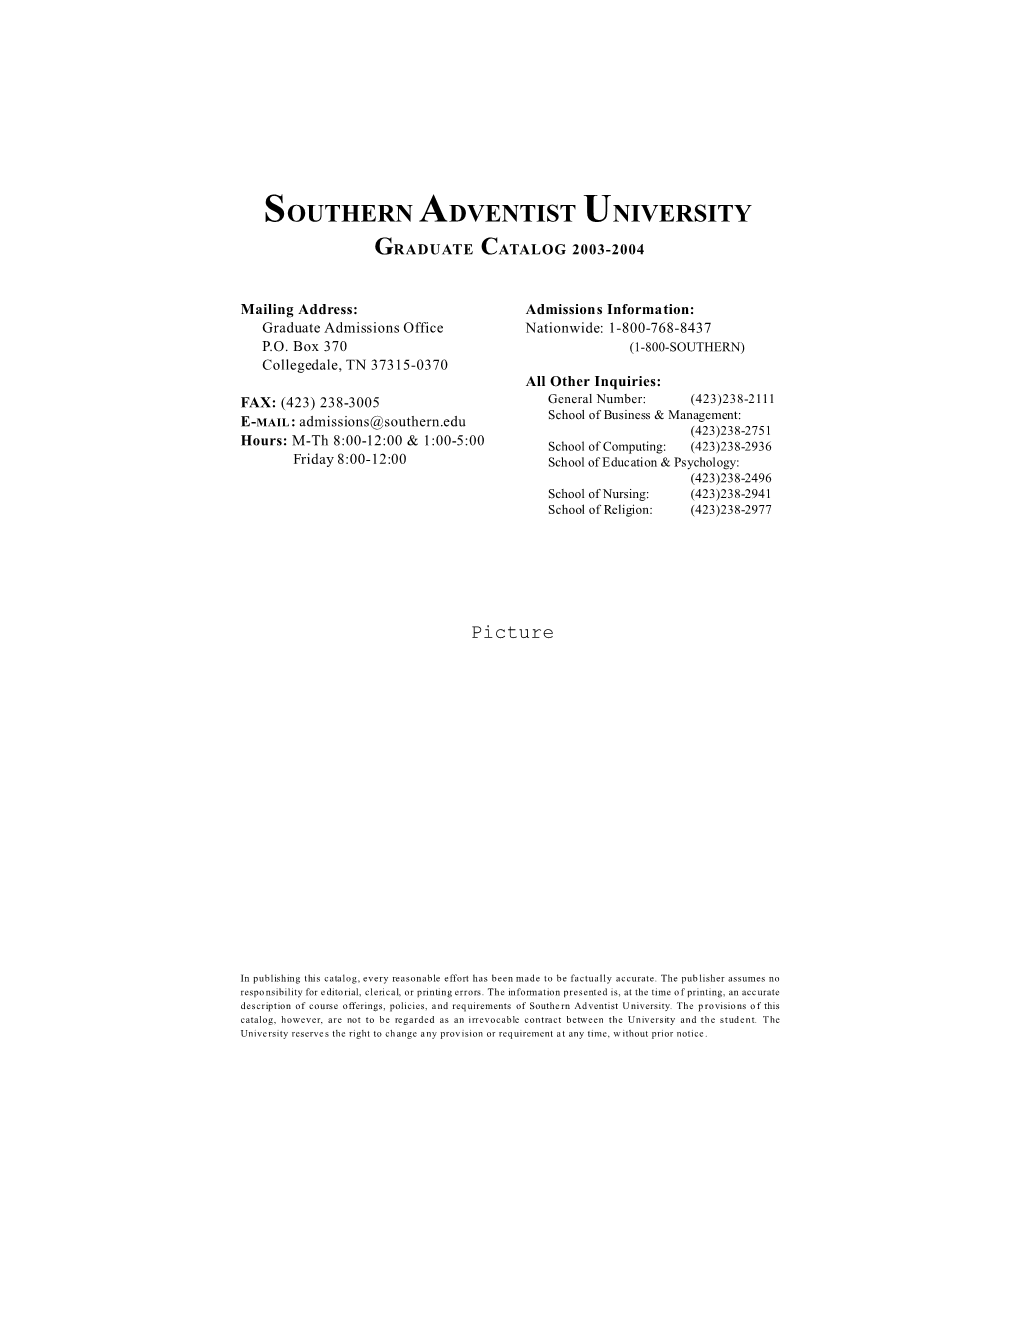 Southern Adventist University Graduate Catalog 2003-2004